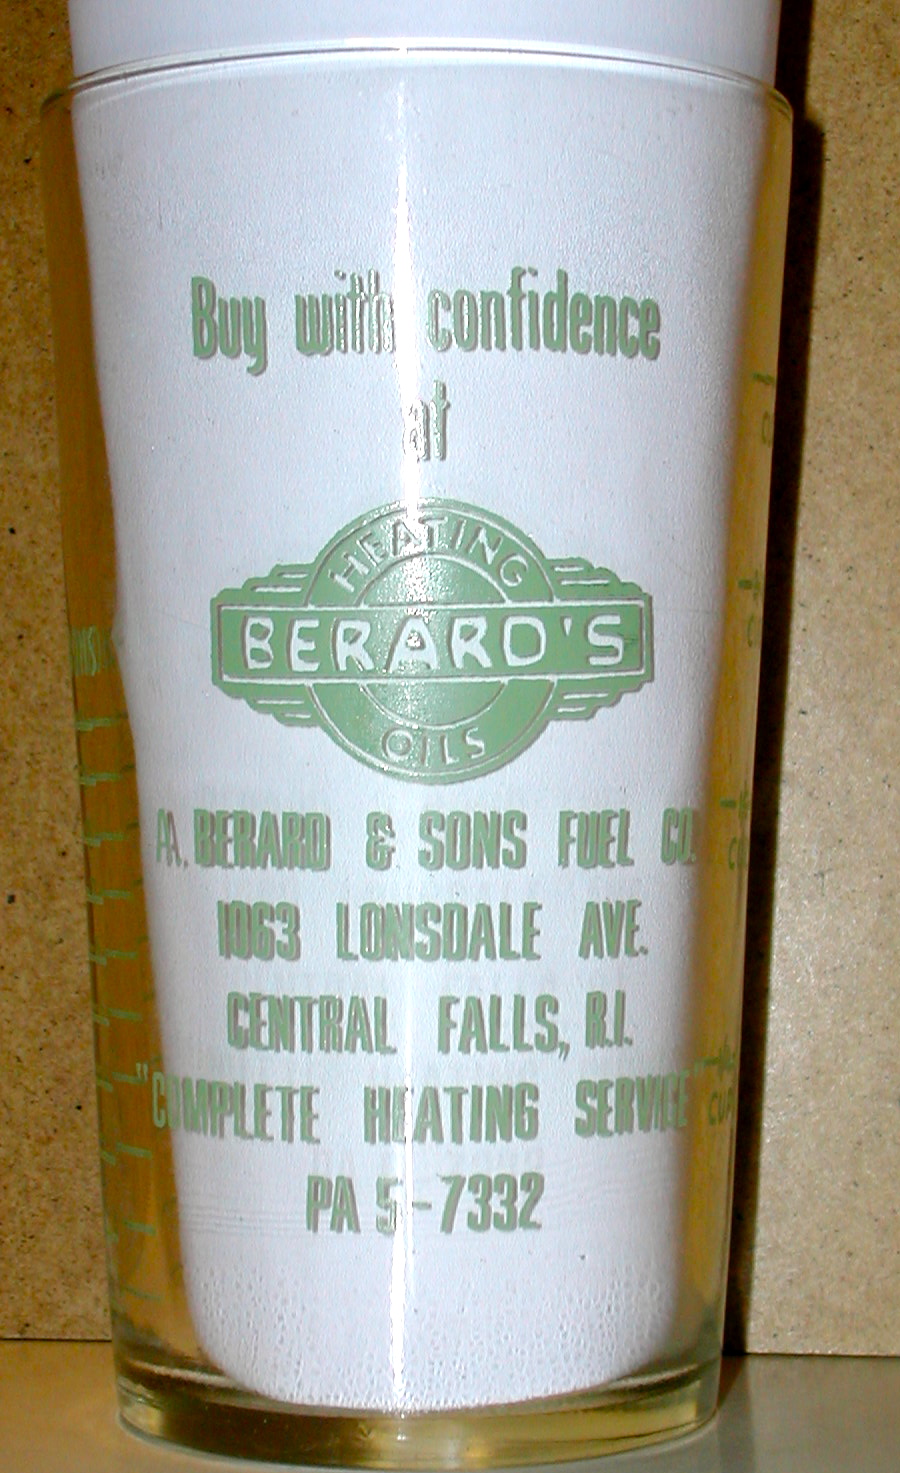 Berard's Heating Oils